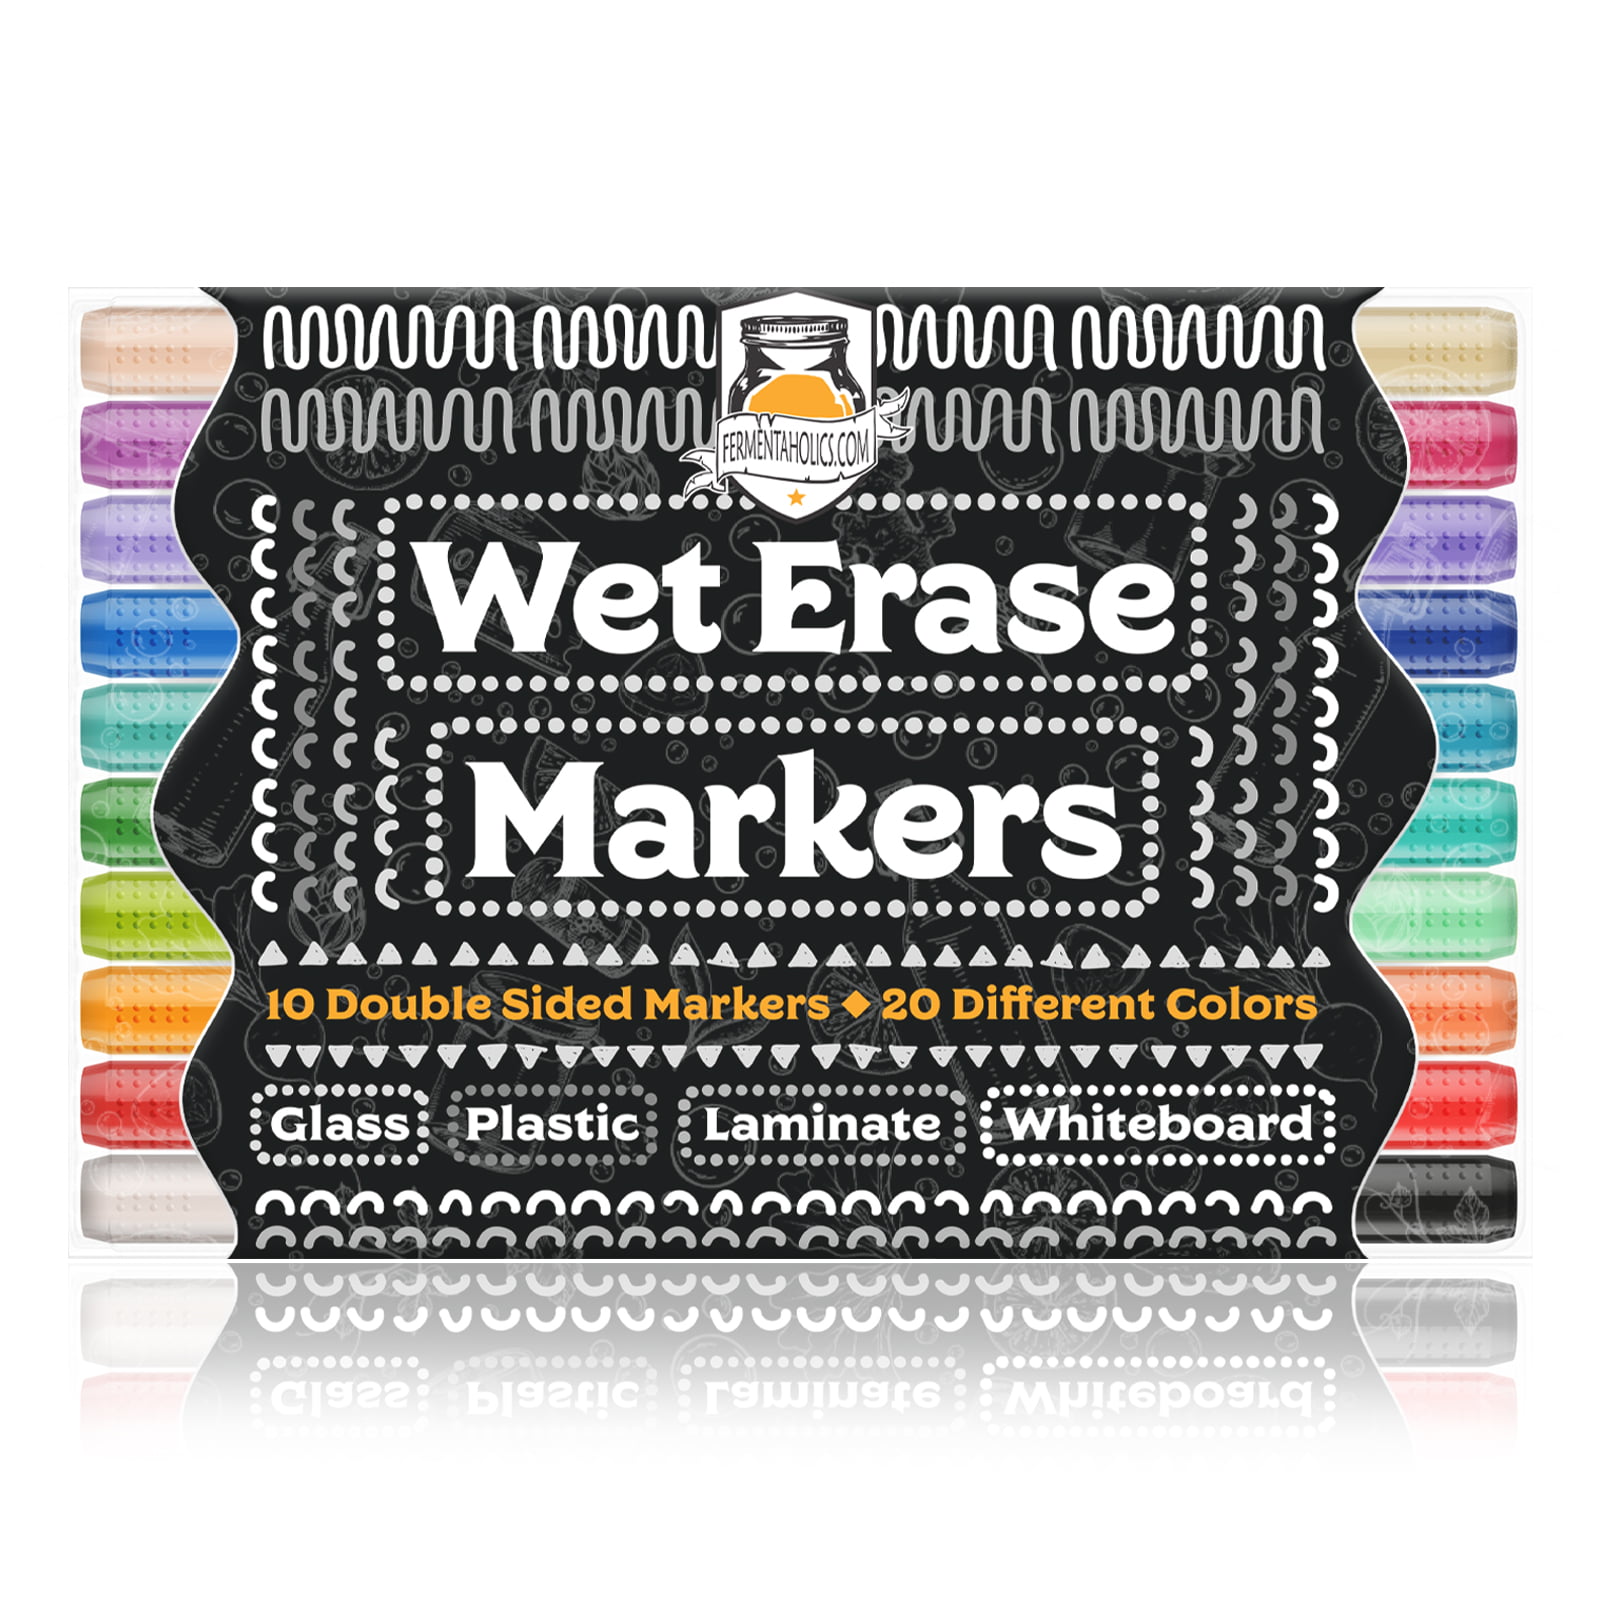 Wet Erase Markers